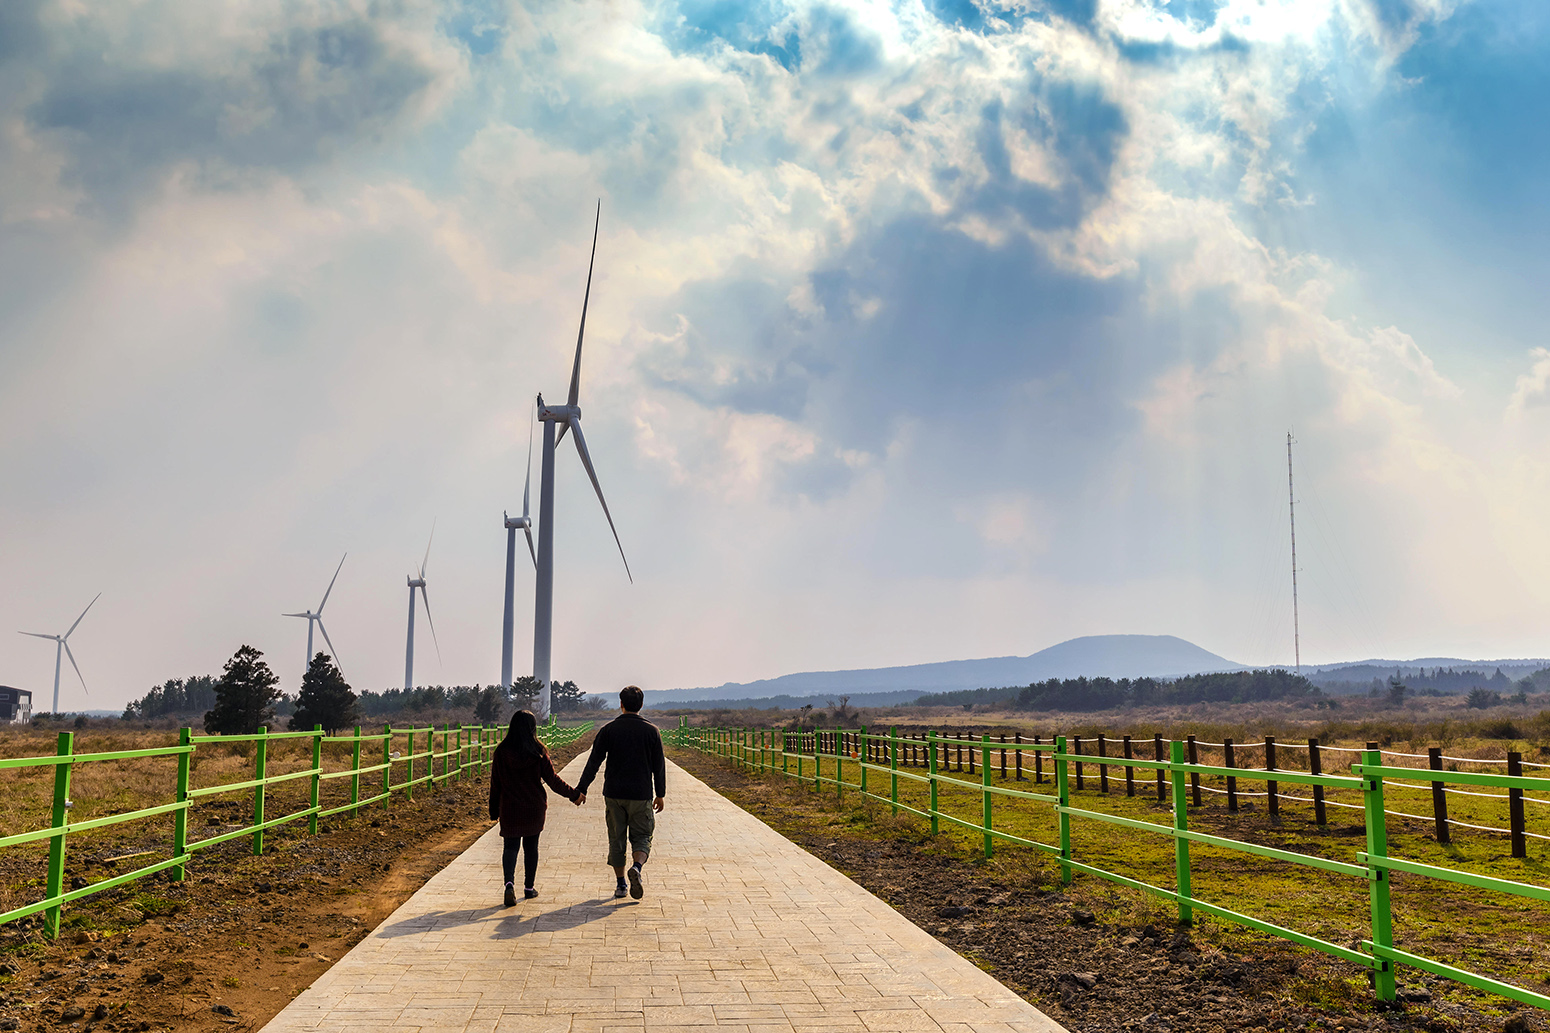 A wind farm on Jeju Island, South Korea. Credit: Noppasin Wongchum / Alamy Stock Photo. HX0BP5